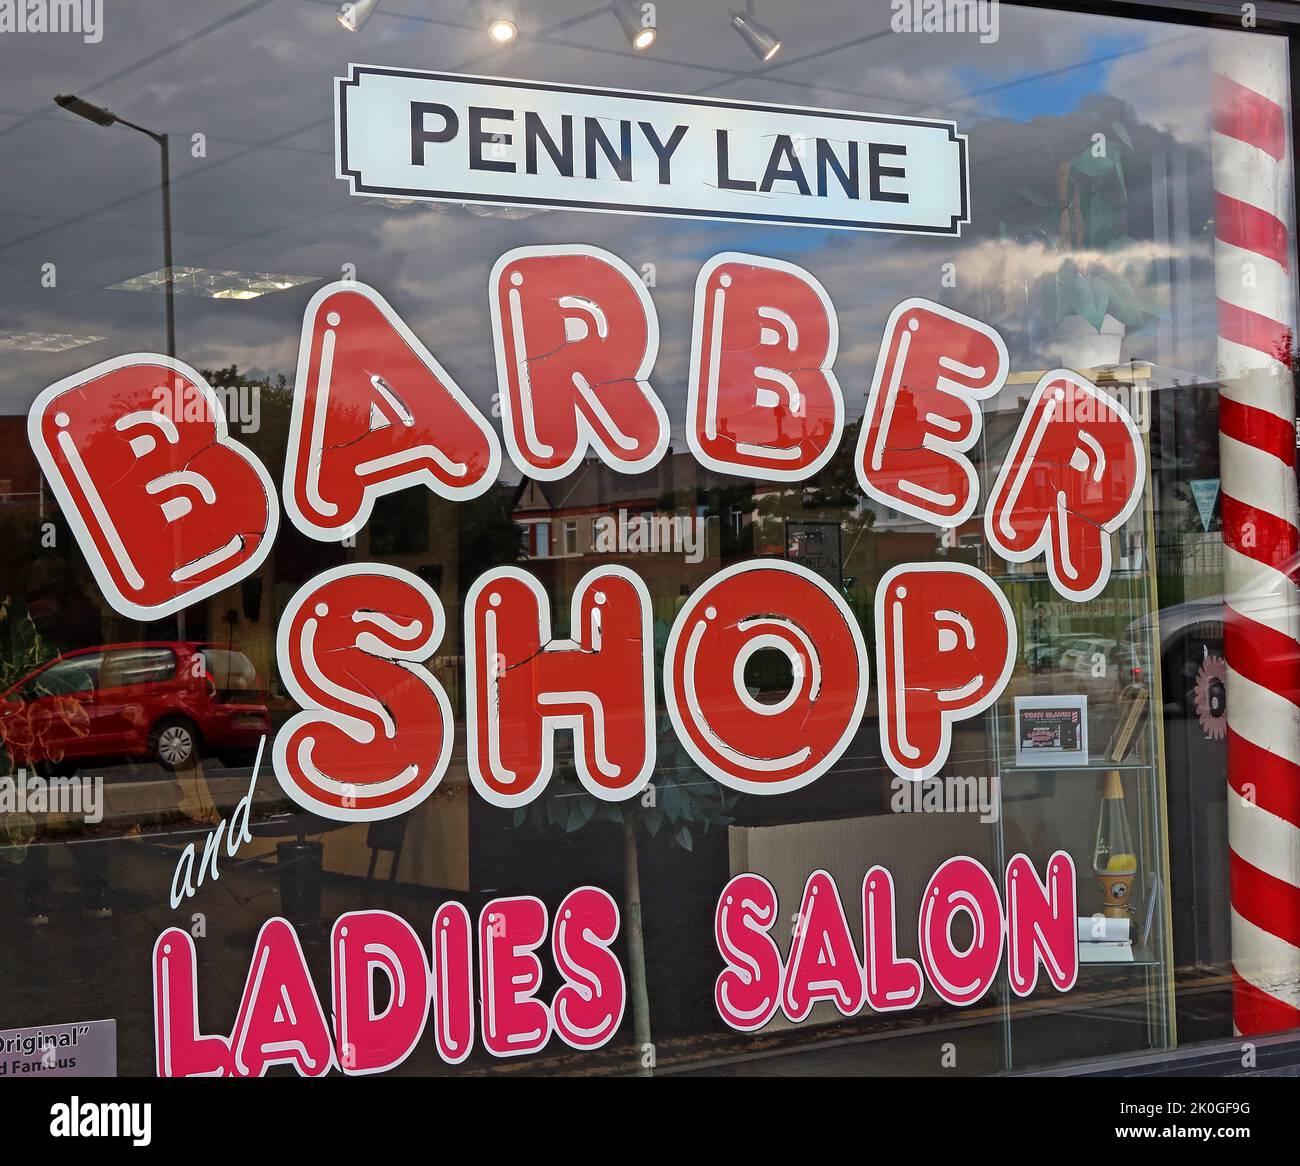 The Barber Shop, am Fuße der Penny Lane, Tony Slavins, 11 Smithdown PL, Liverpool, Merseyside, ENGLAND, GROSSBRITANNIEN, L15 9EH Stockfoto